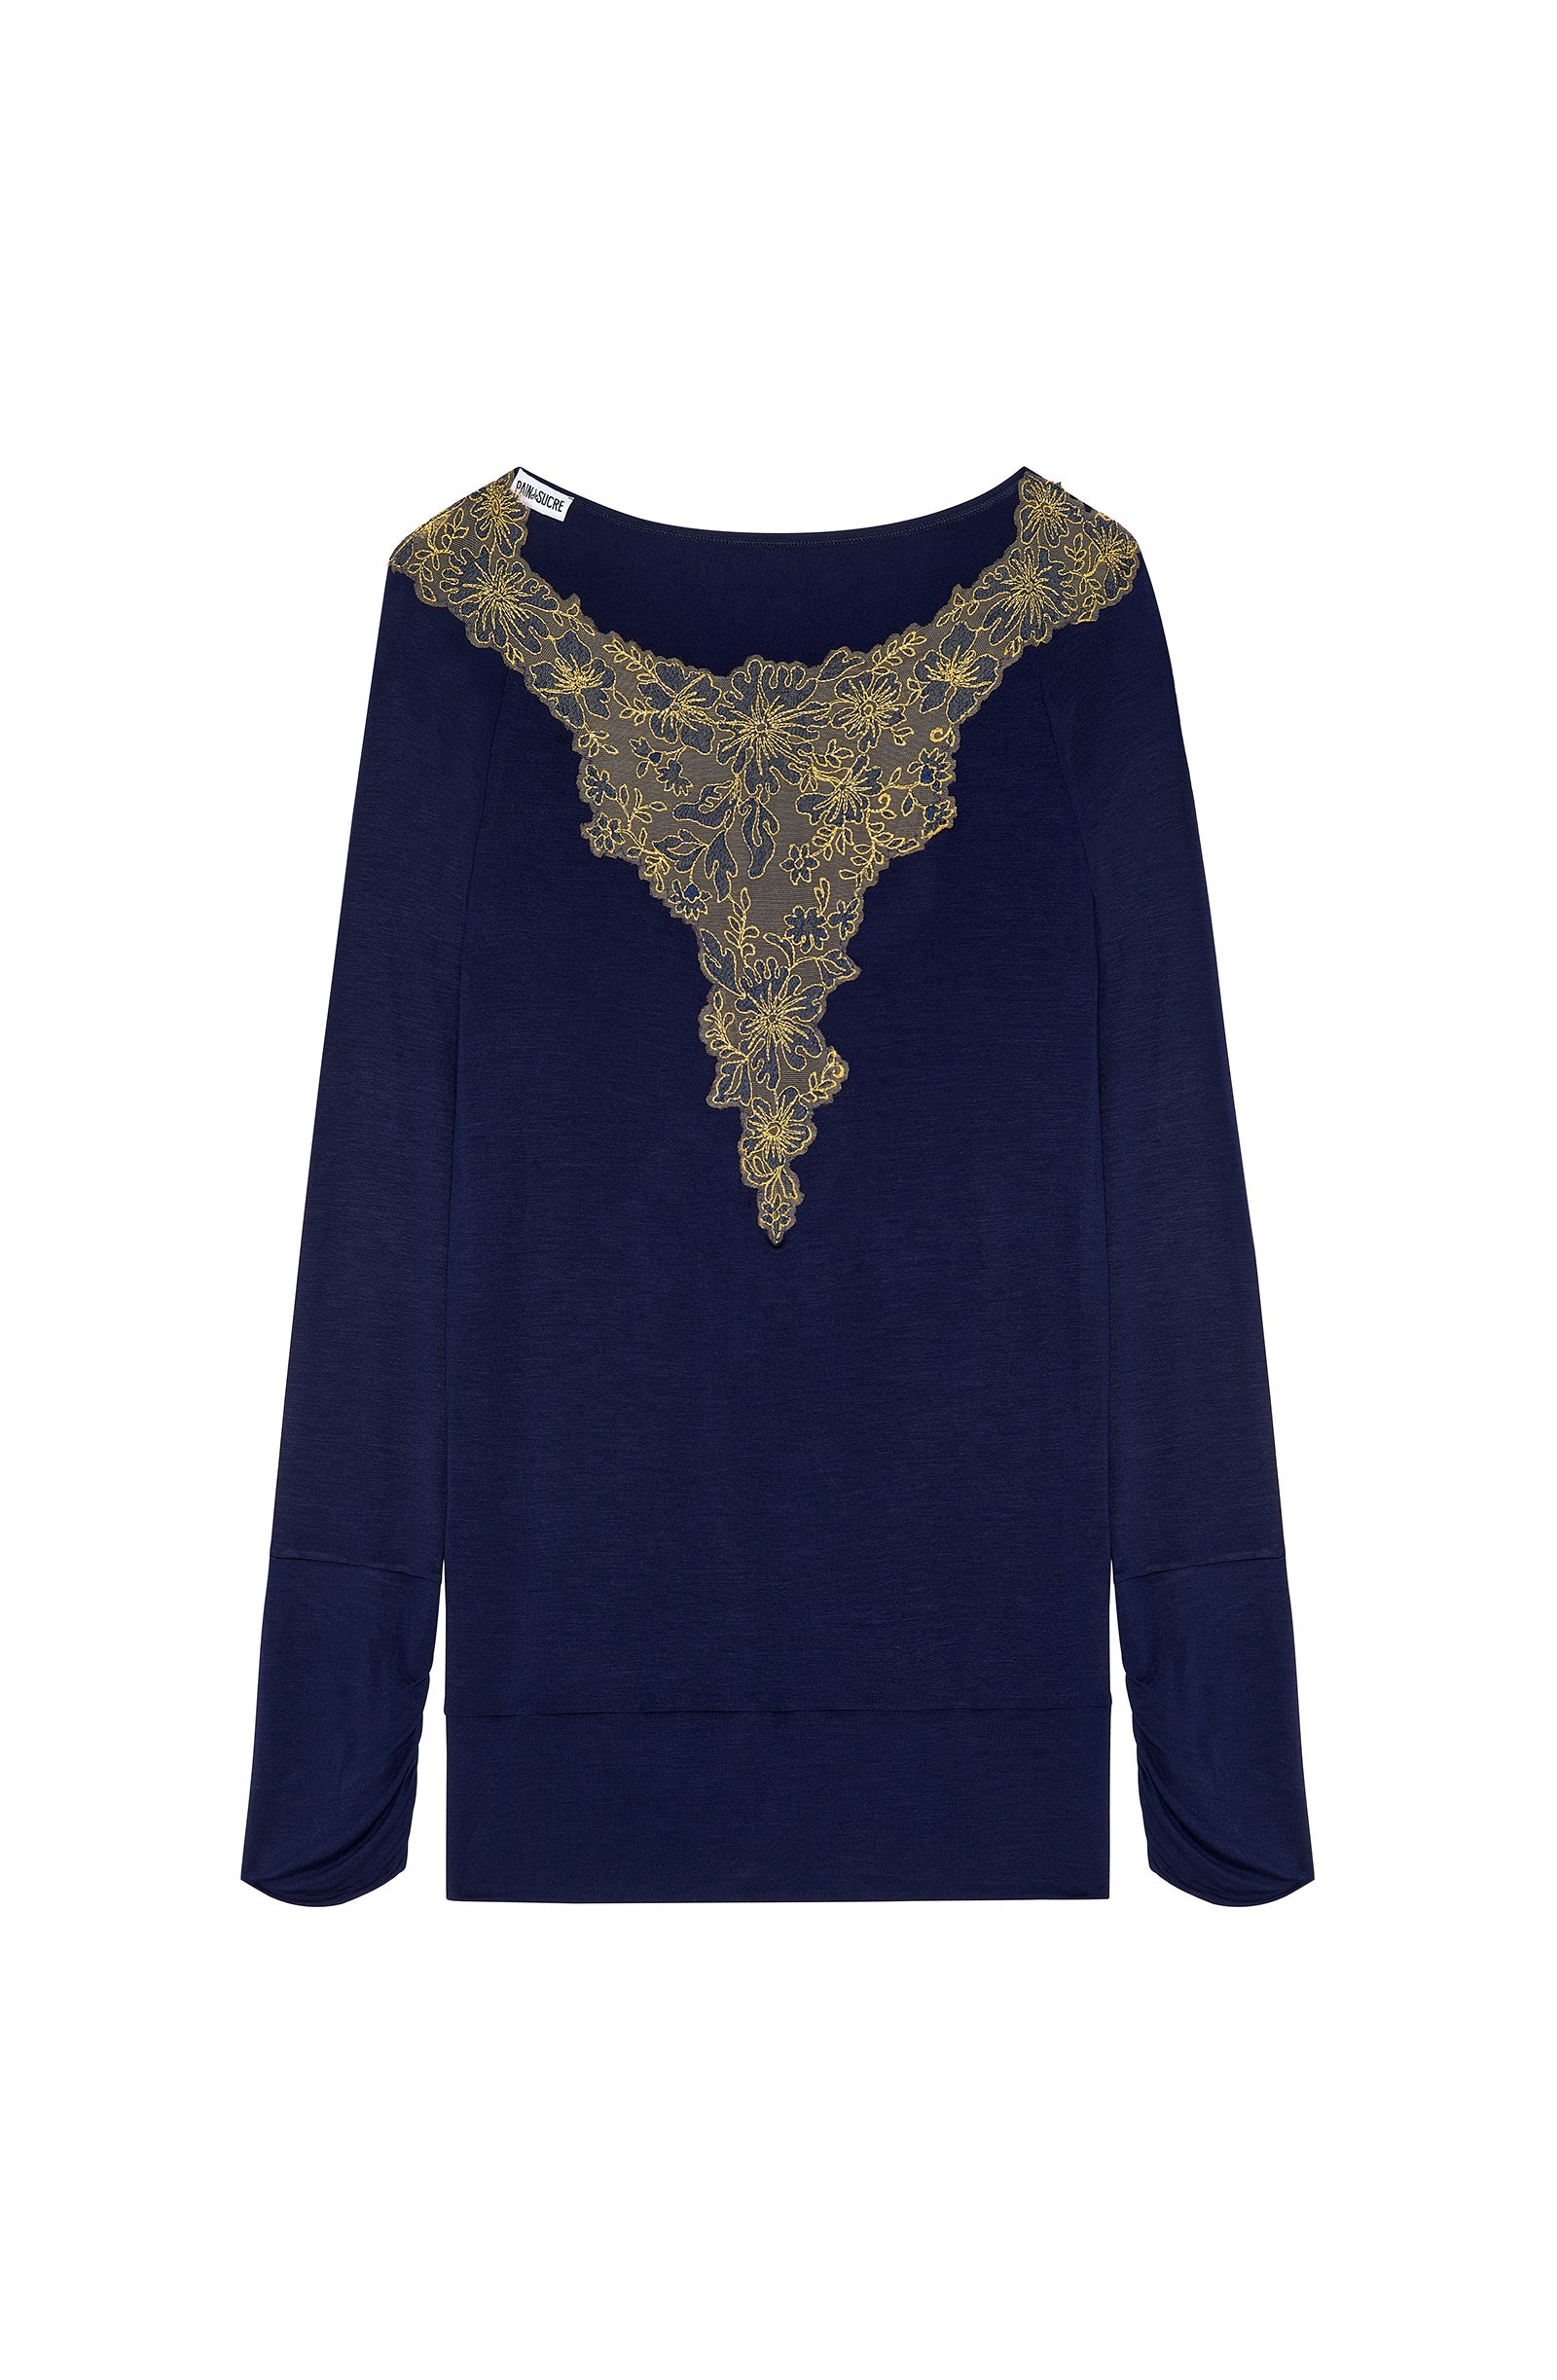 torina Navy long-sleeved top, golden Lurex thread embroidery